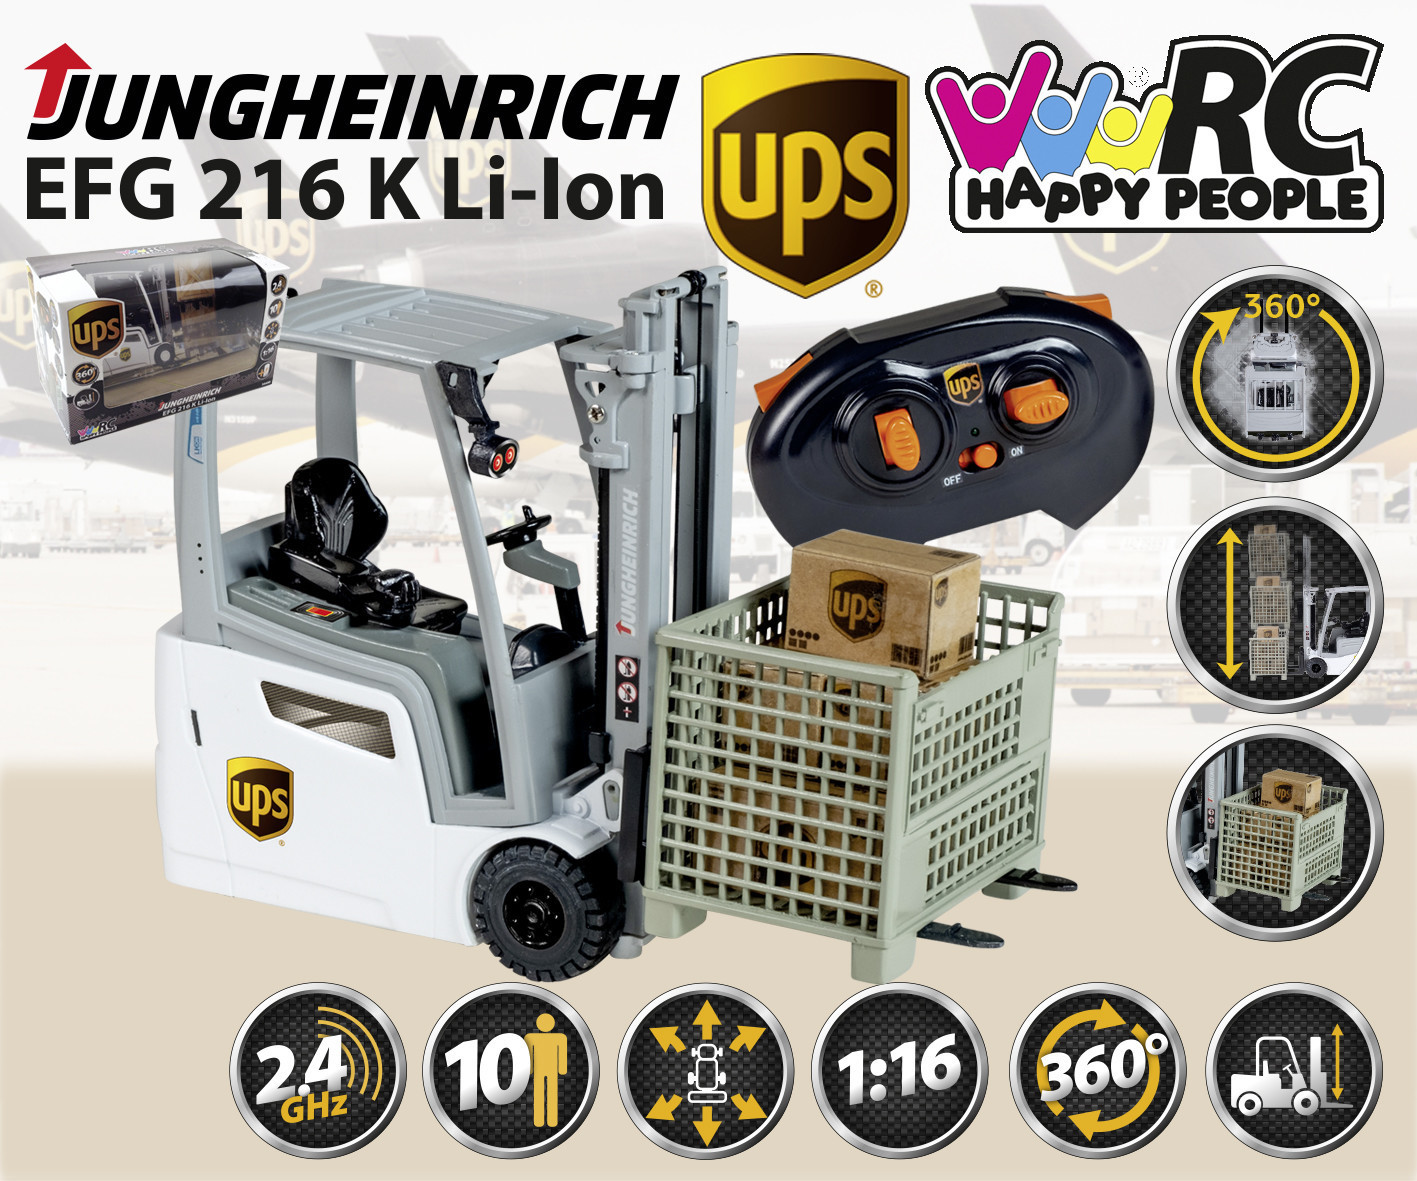 Happy People HP RC UPS Jungheinrich 1:16 Gabelstapler (34450) ab 29,99 €